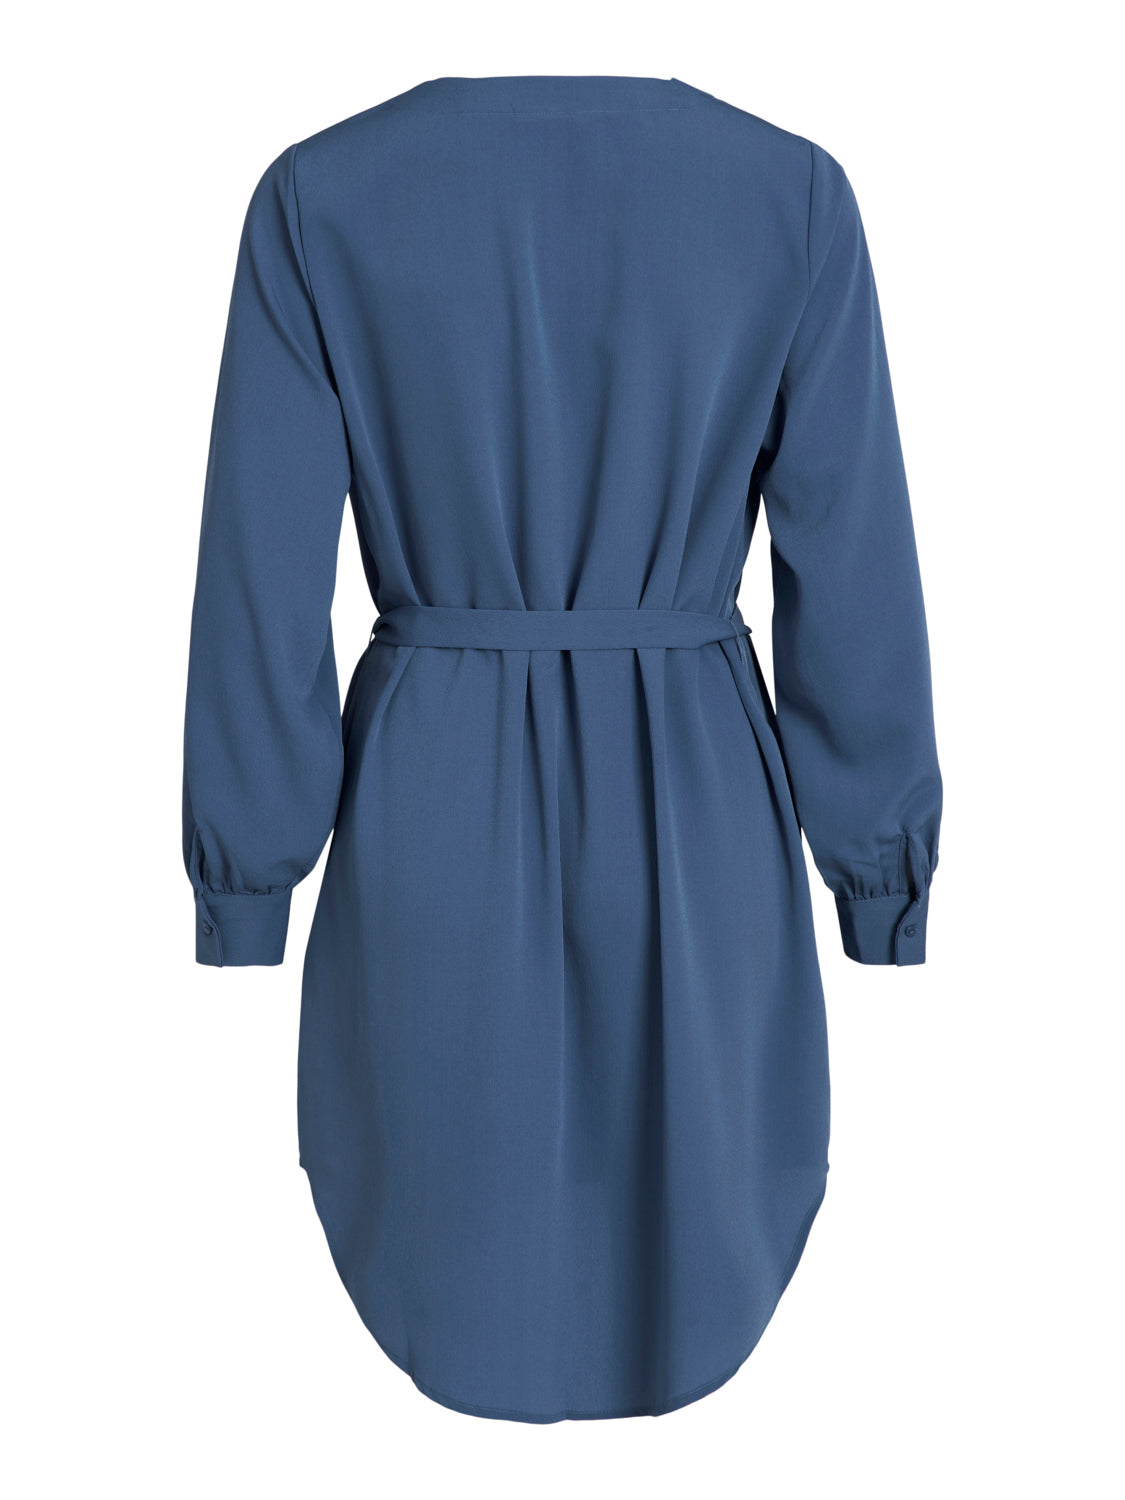 VIRENAN Dress - Federal Blue